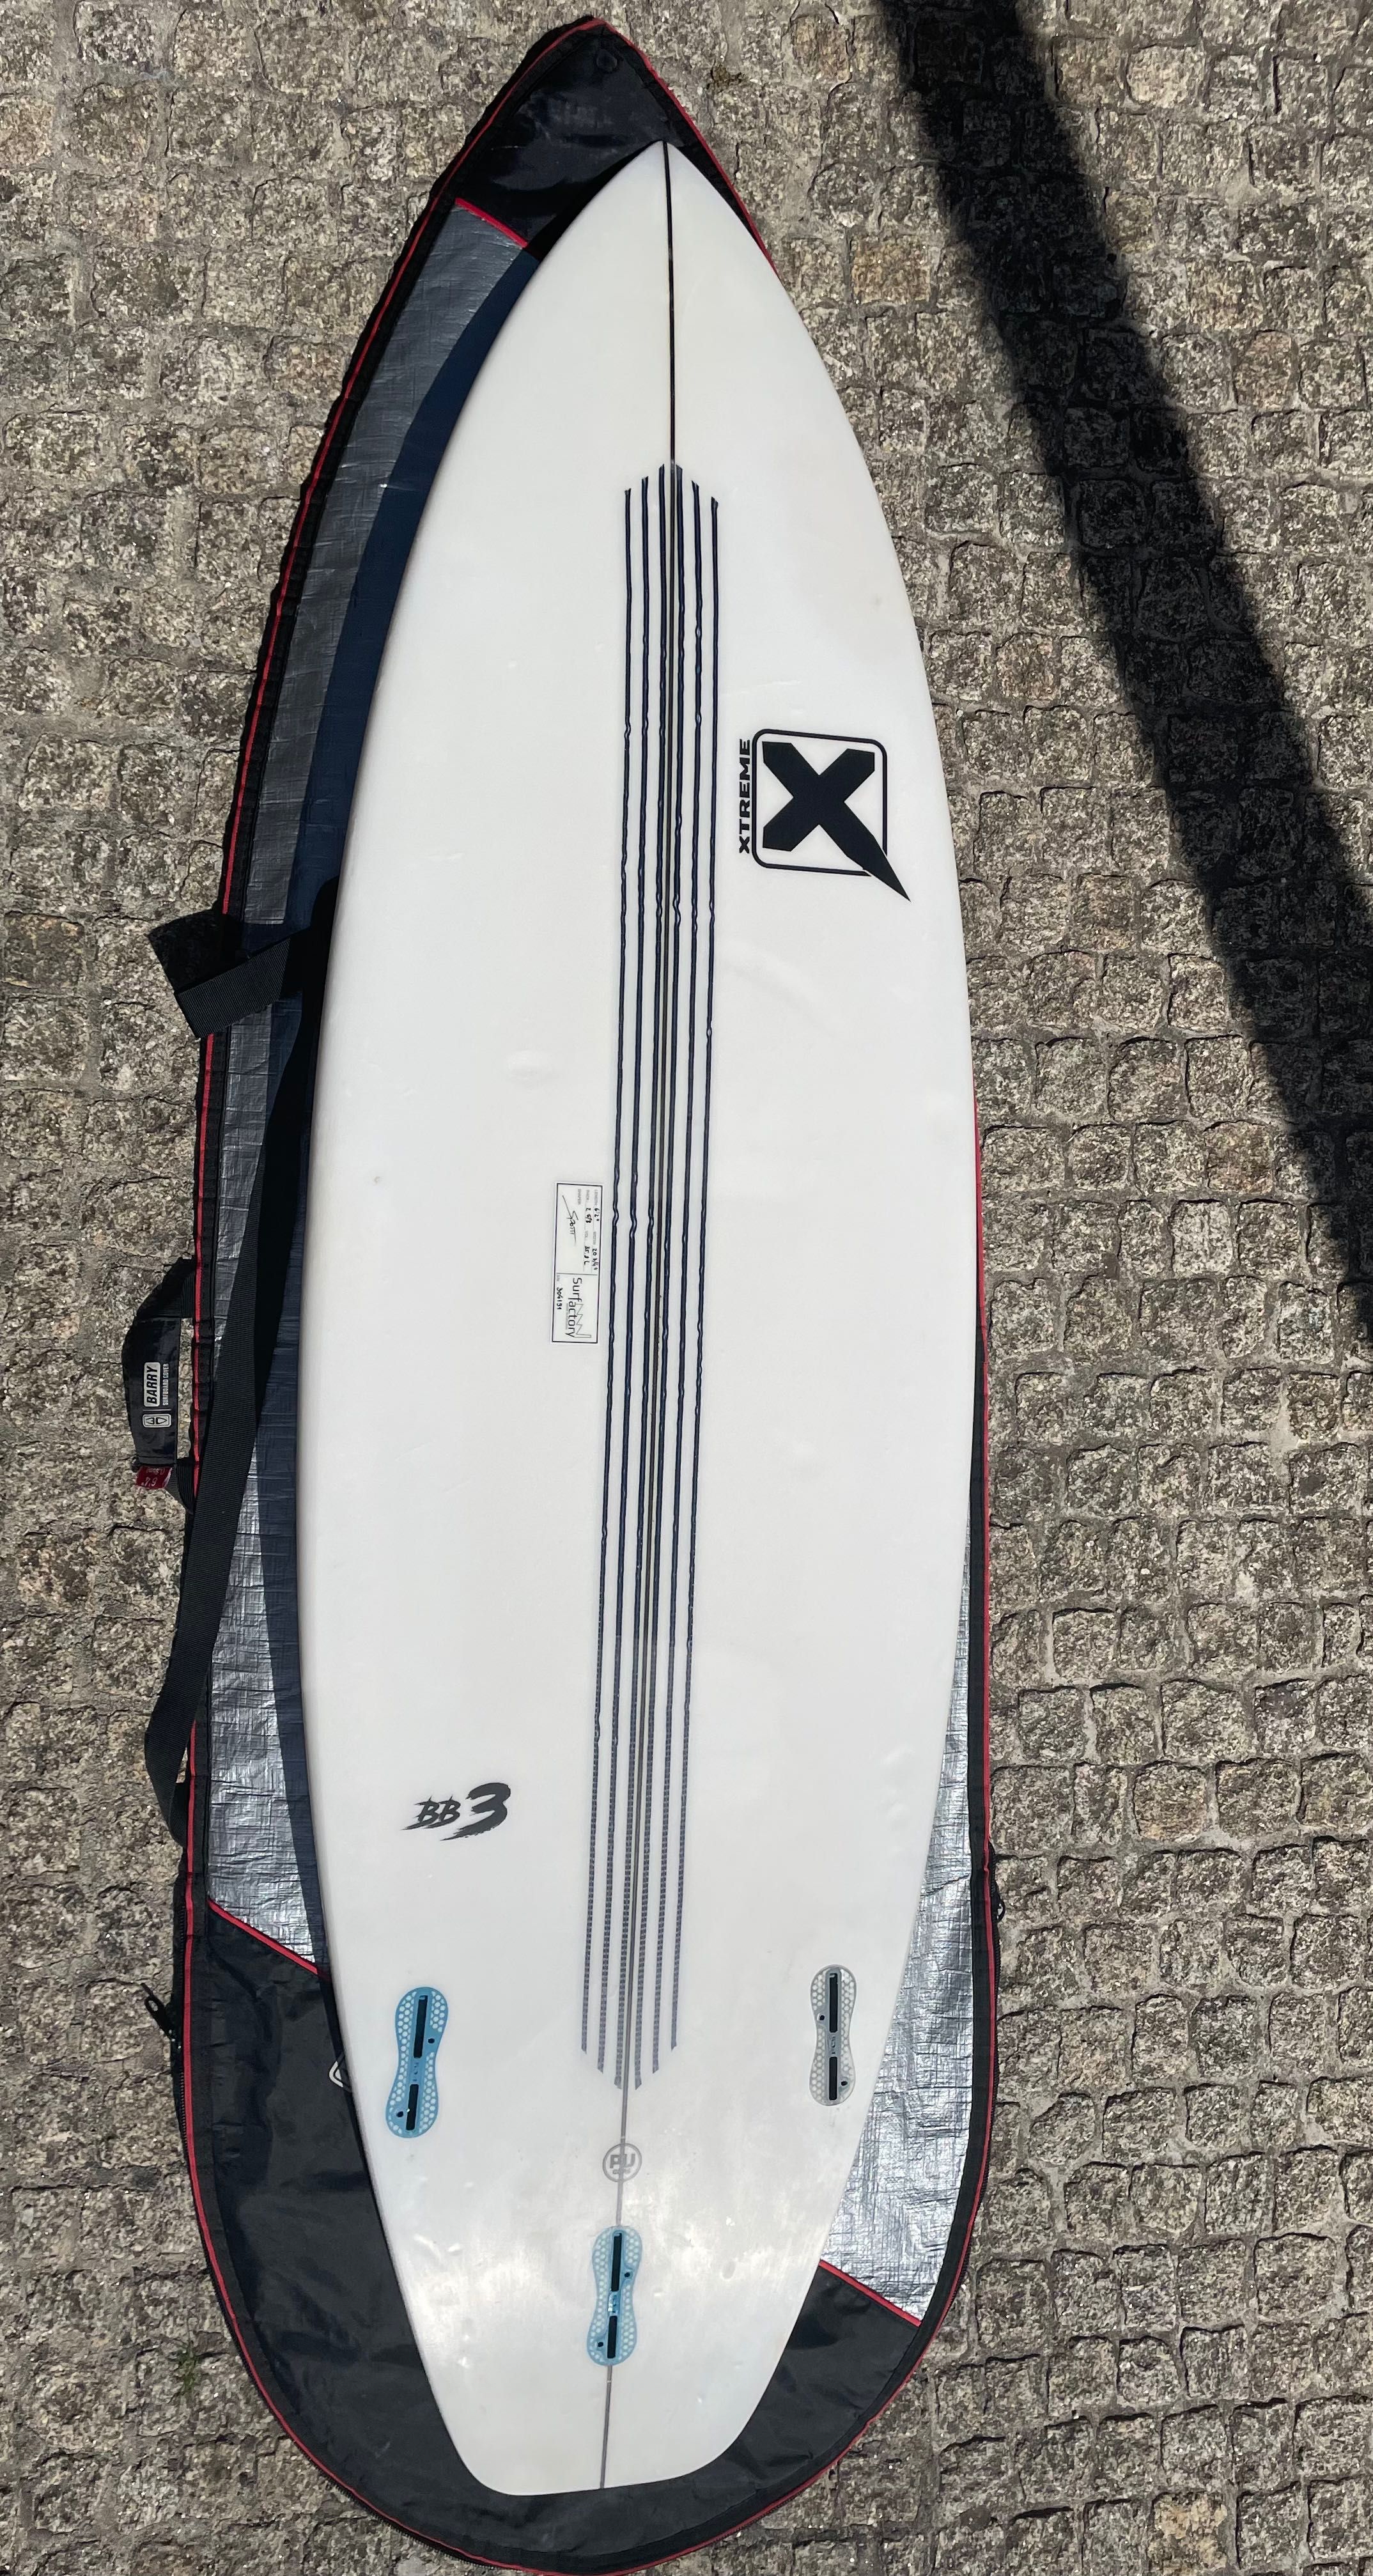 Surfboard Xtreme BB3